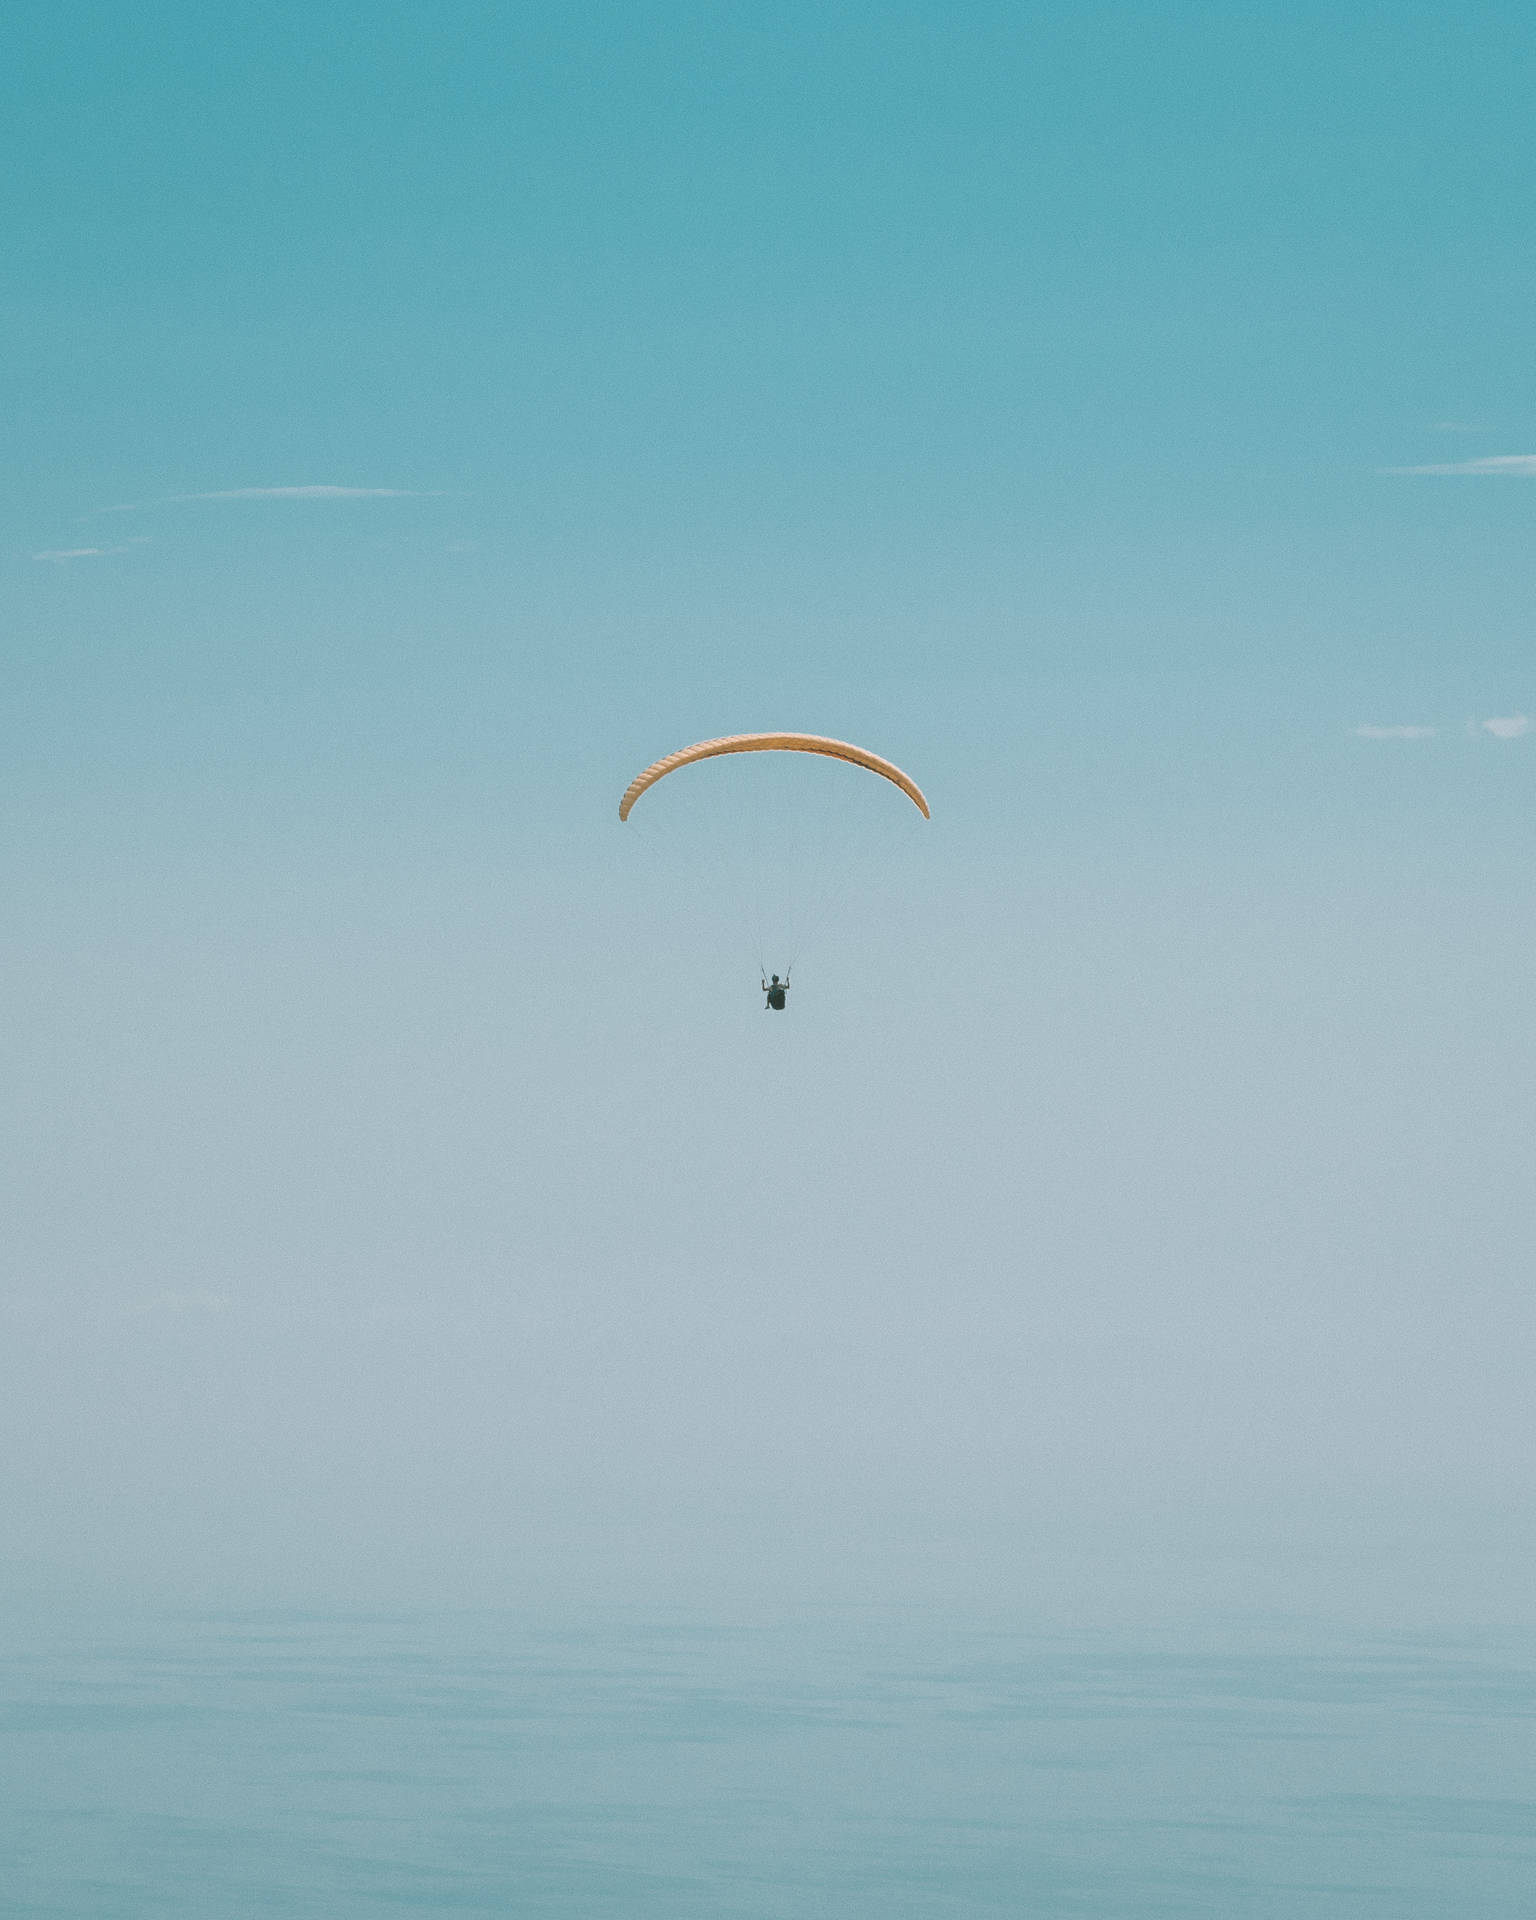 Paraglidinghimmel Im Leichten Blau Wallpaper